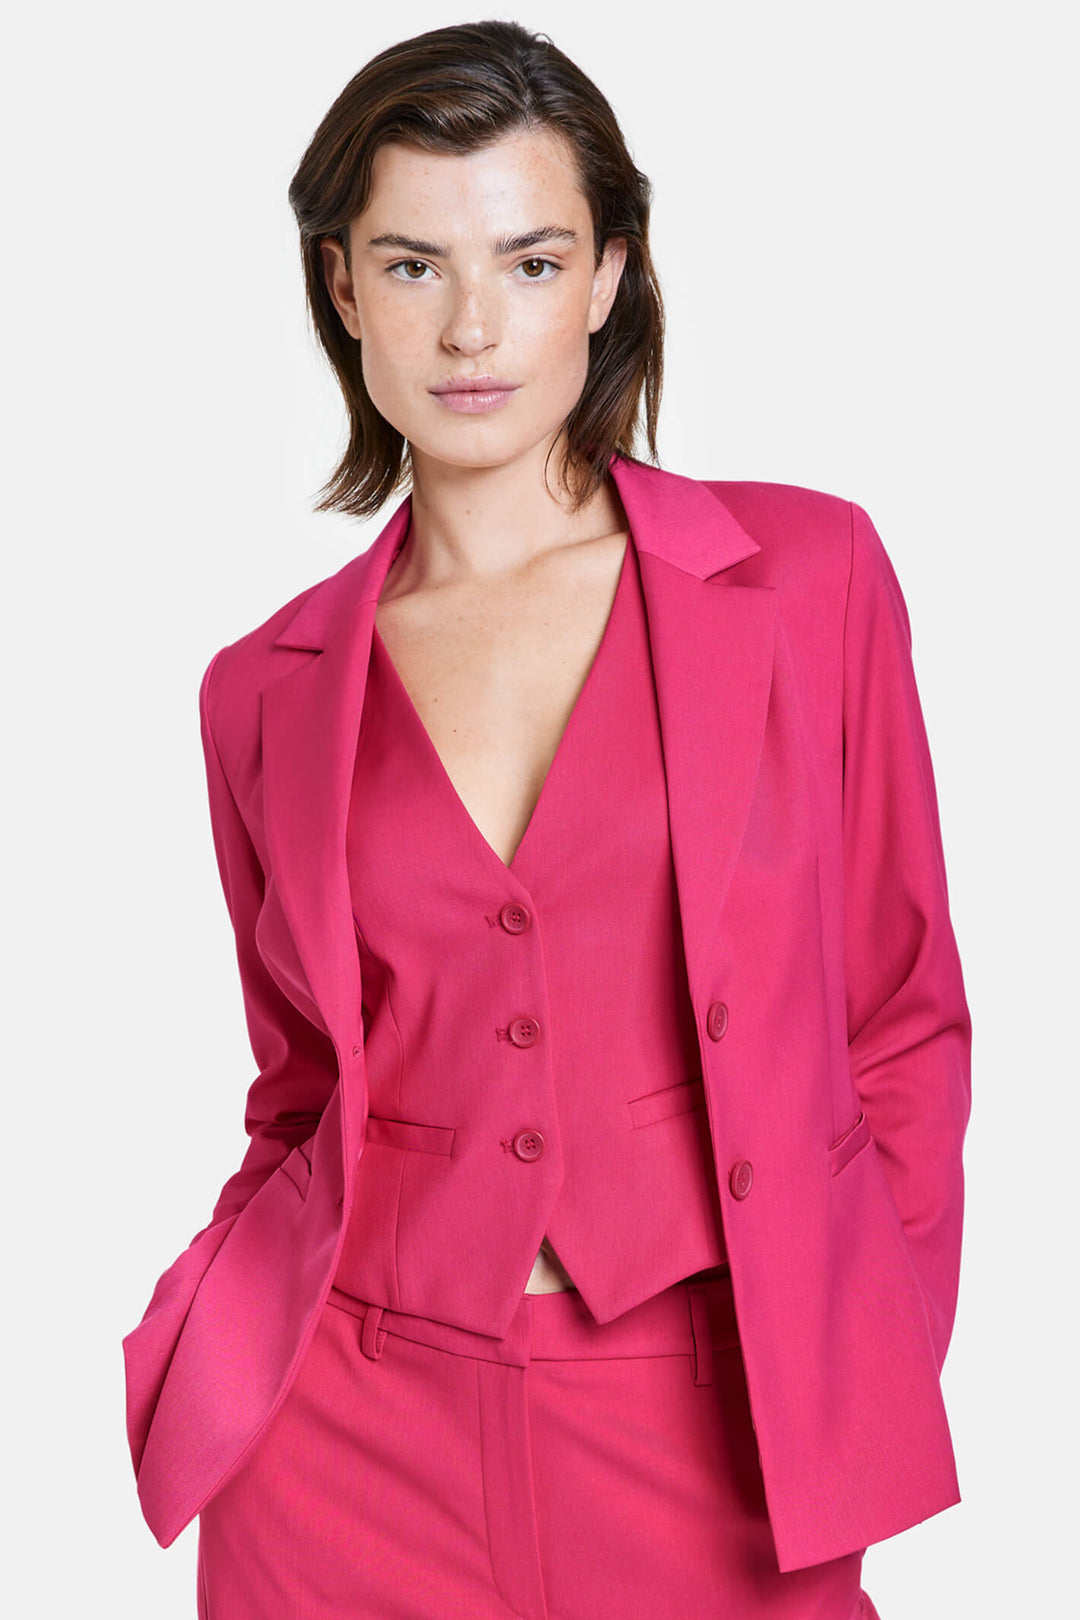 Taifun 430401 Luminous Pink Blazer Jacket - Experience Boutique